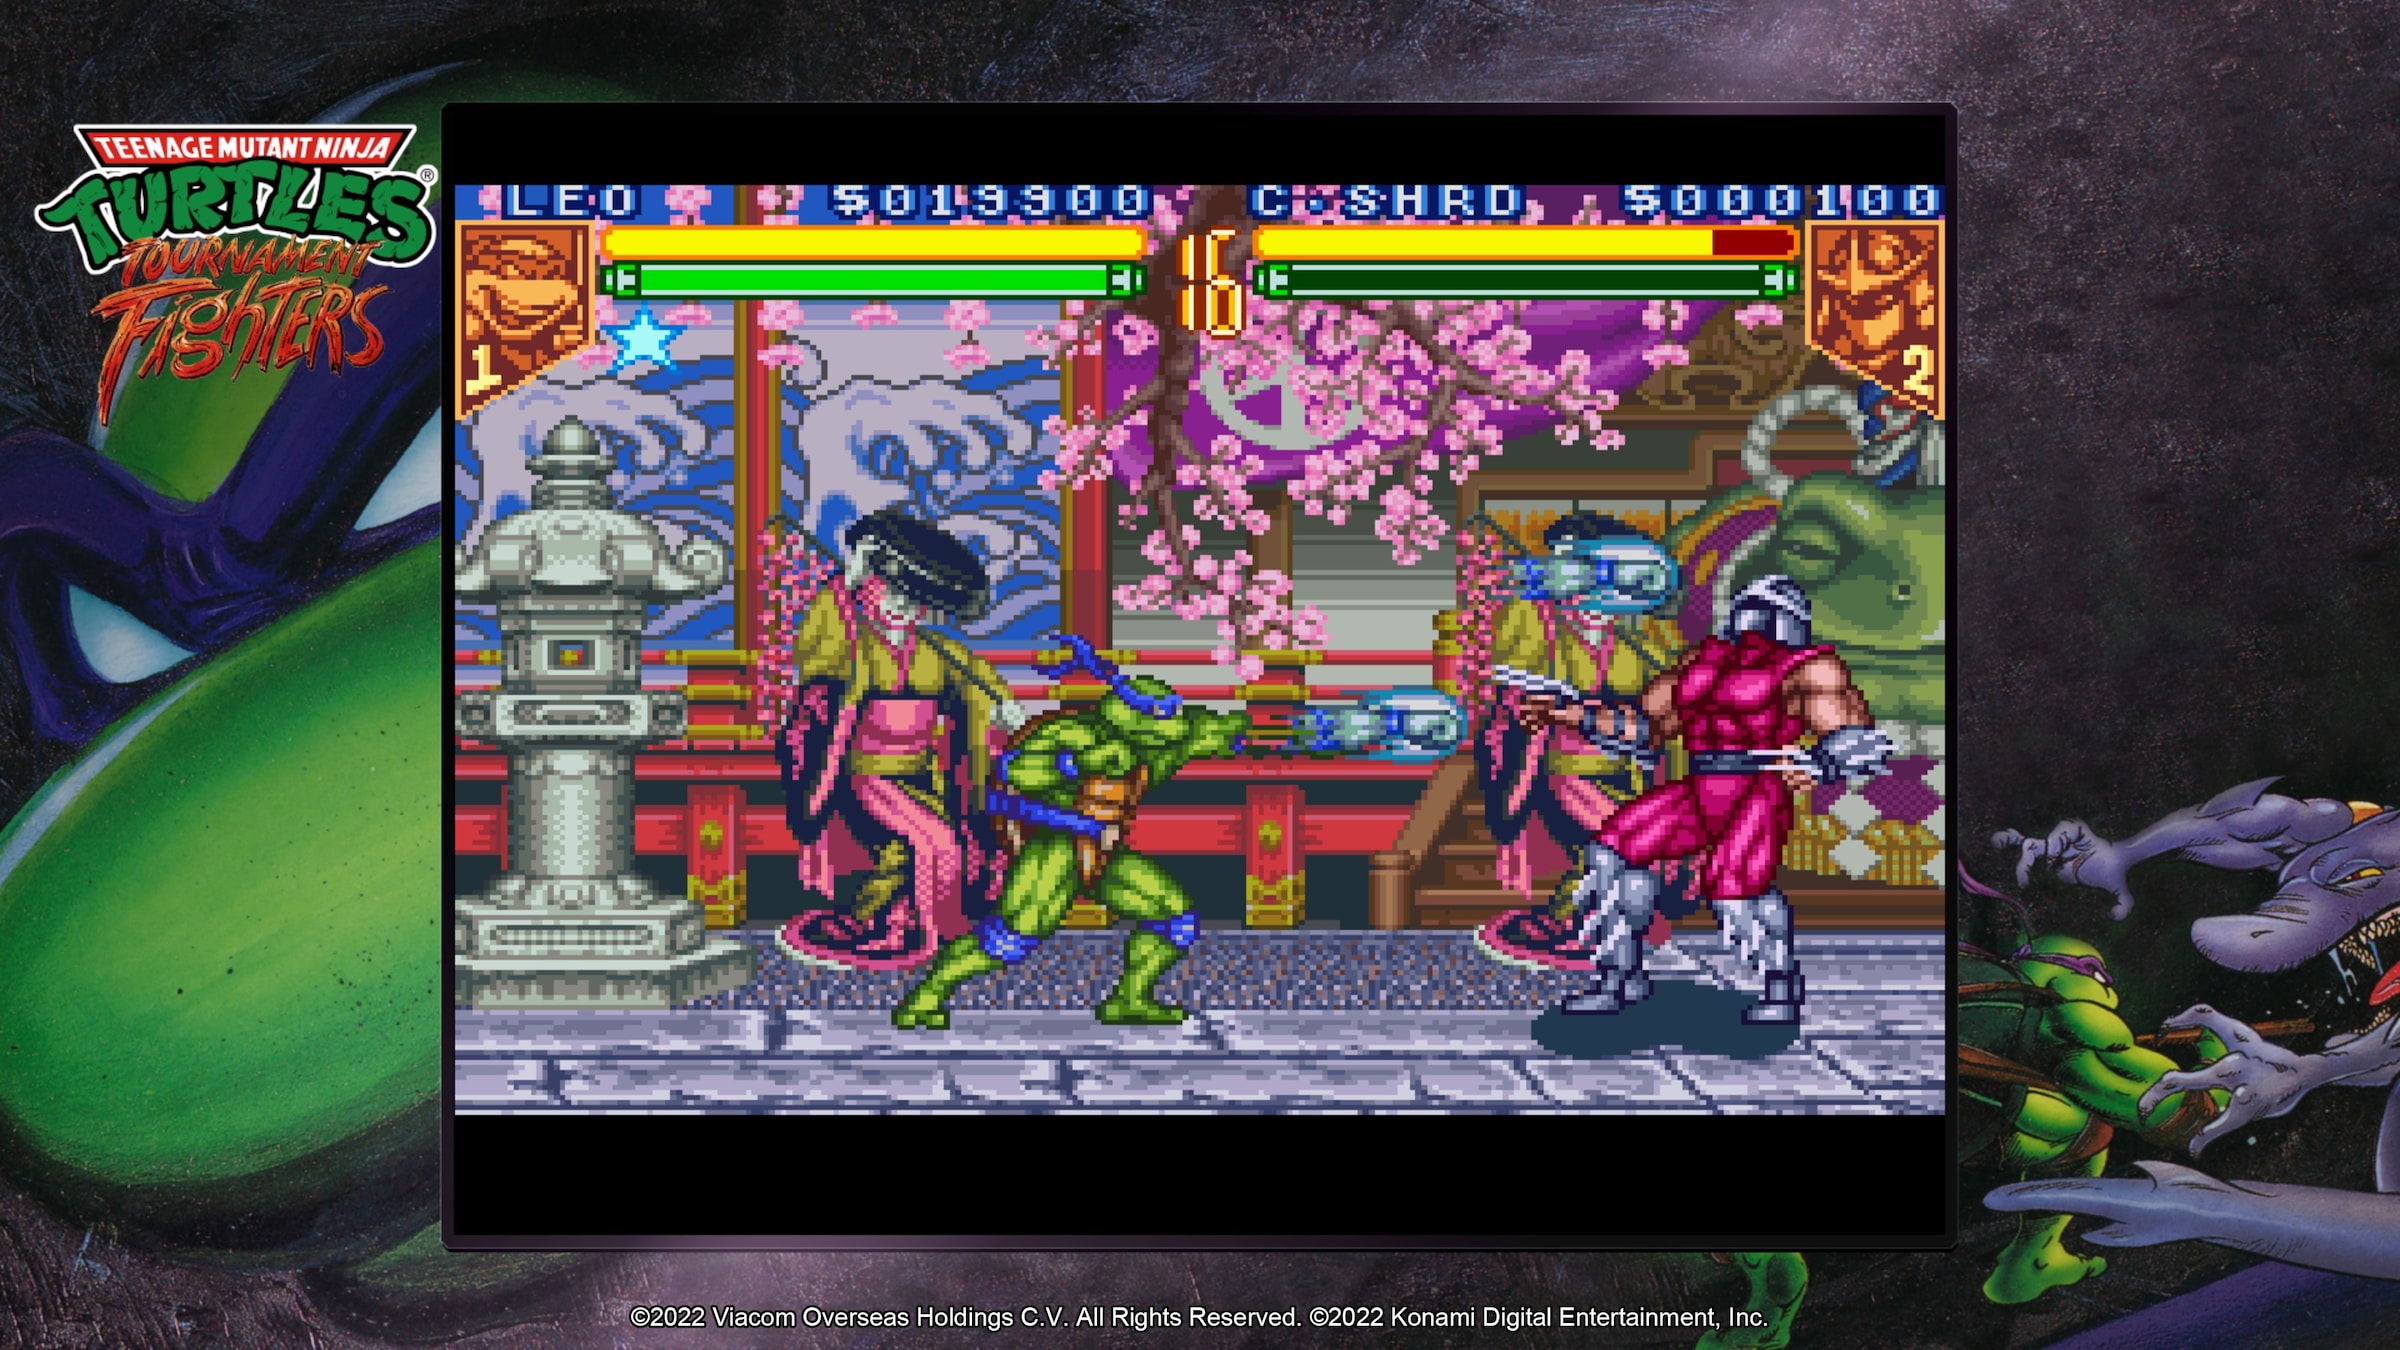 Konami Spielesoftware »Teenage Mutant Ninja Turtles - The Cowabunga Collection«, Nintendo Switch